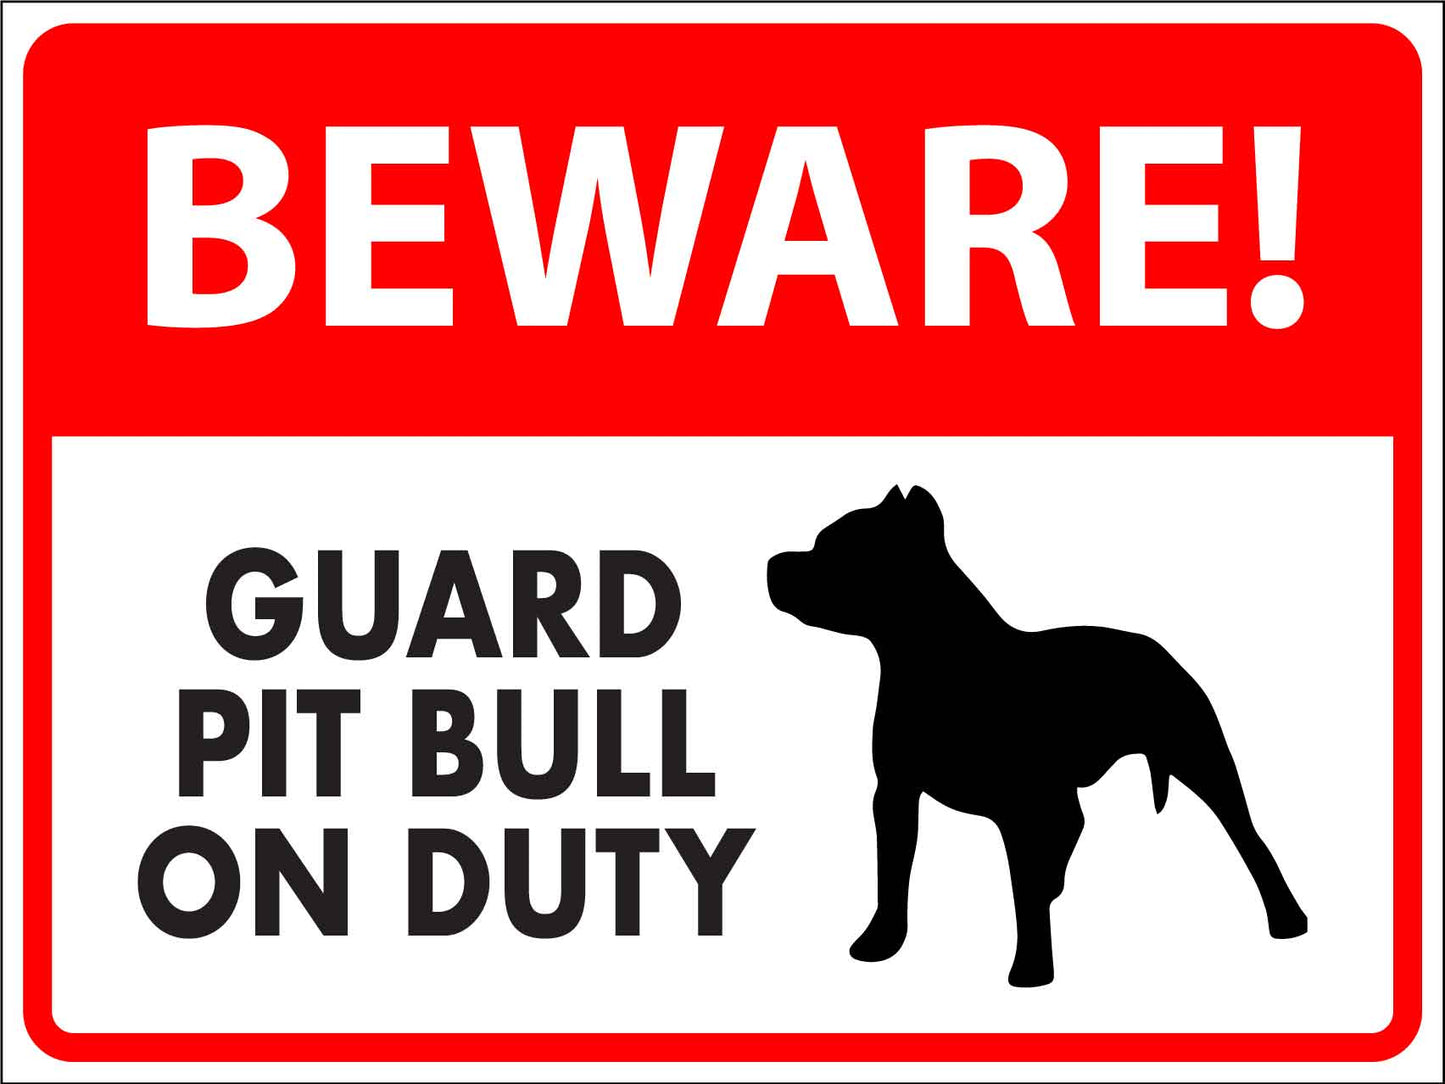 Beware Guard Pitbull On Duty Sign